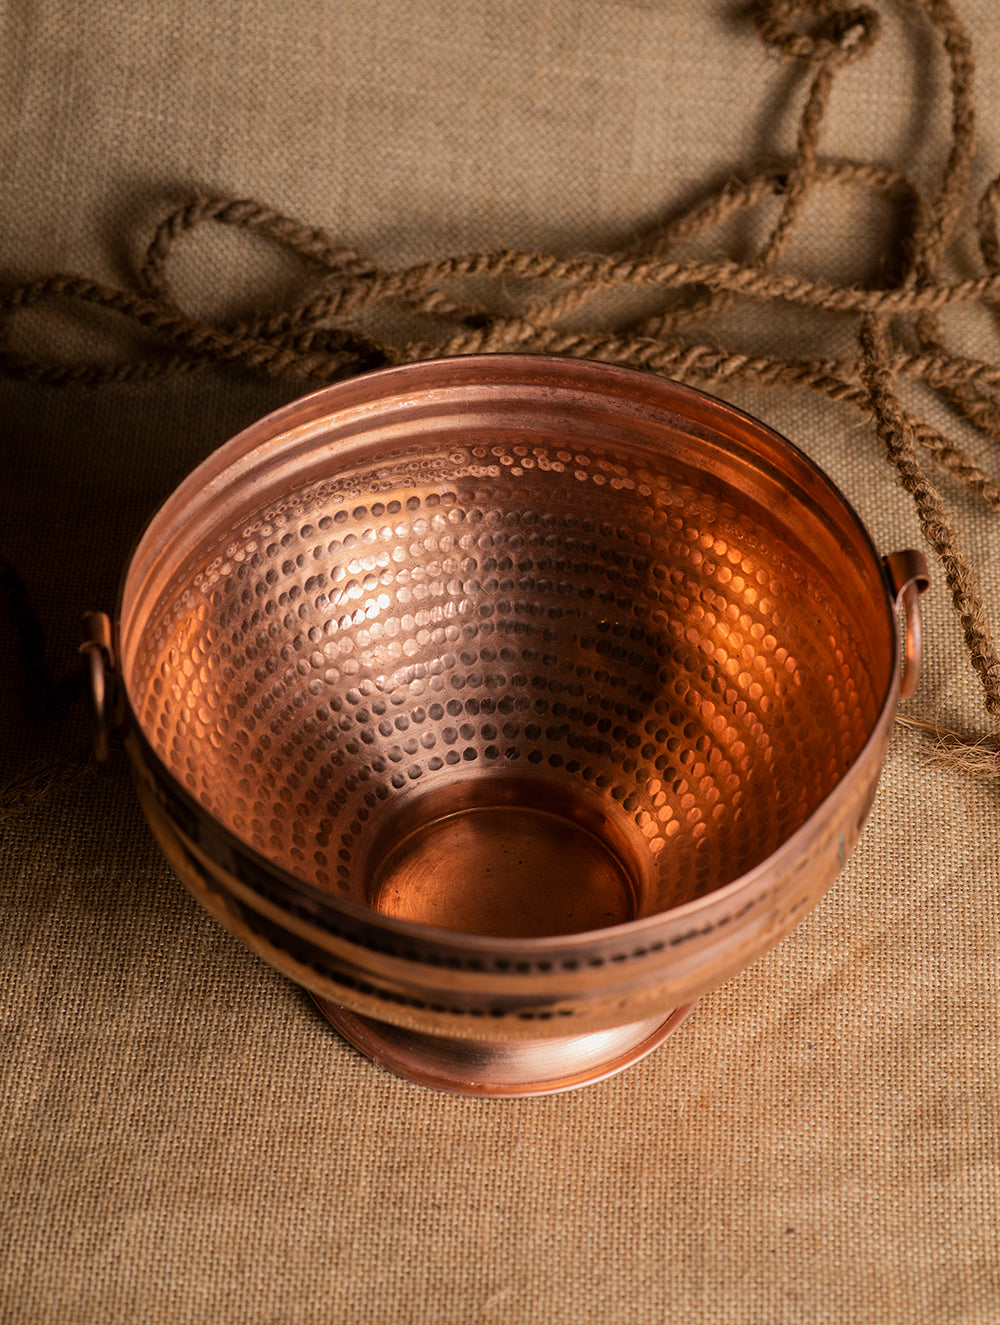 Load image into Gallery viewer, Tambat Handbeaten Copper Gangal - Large, 12&quot;